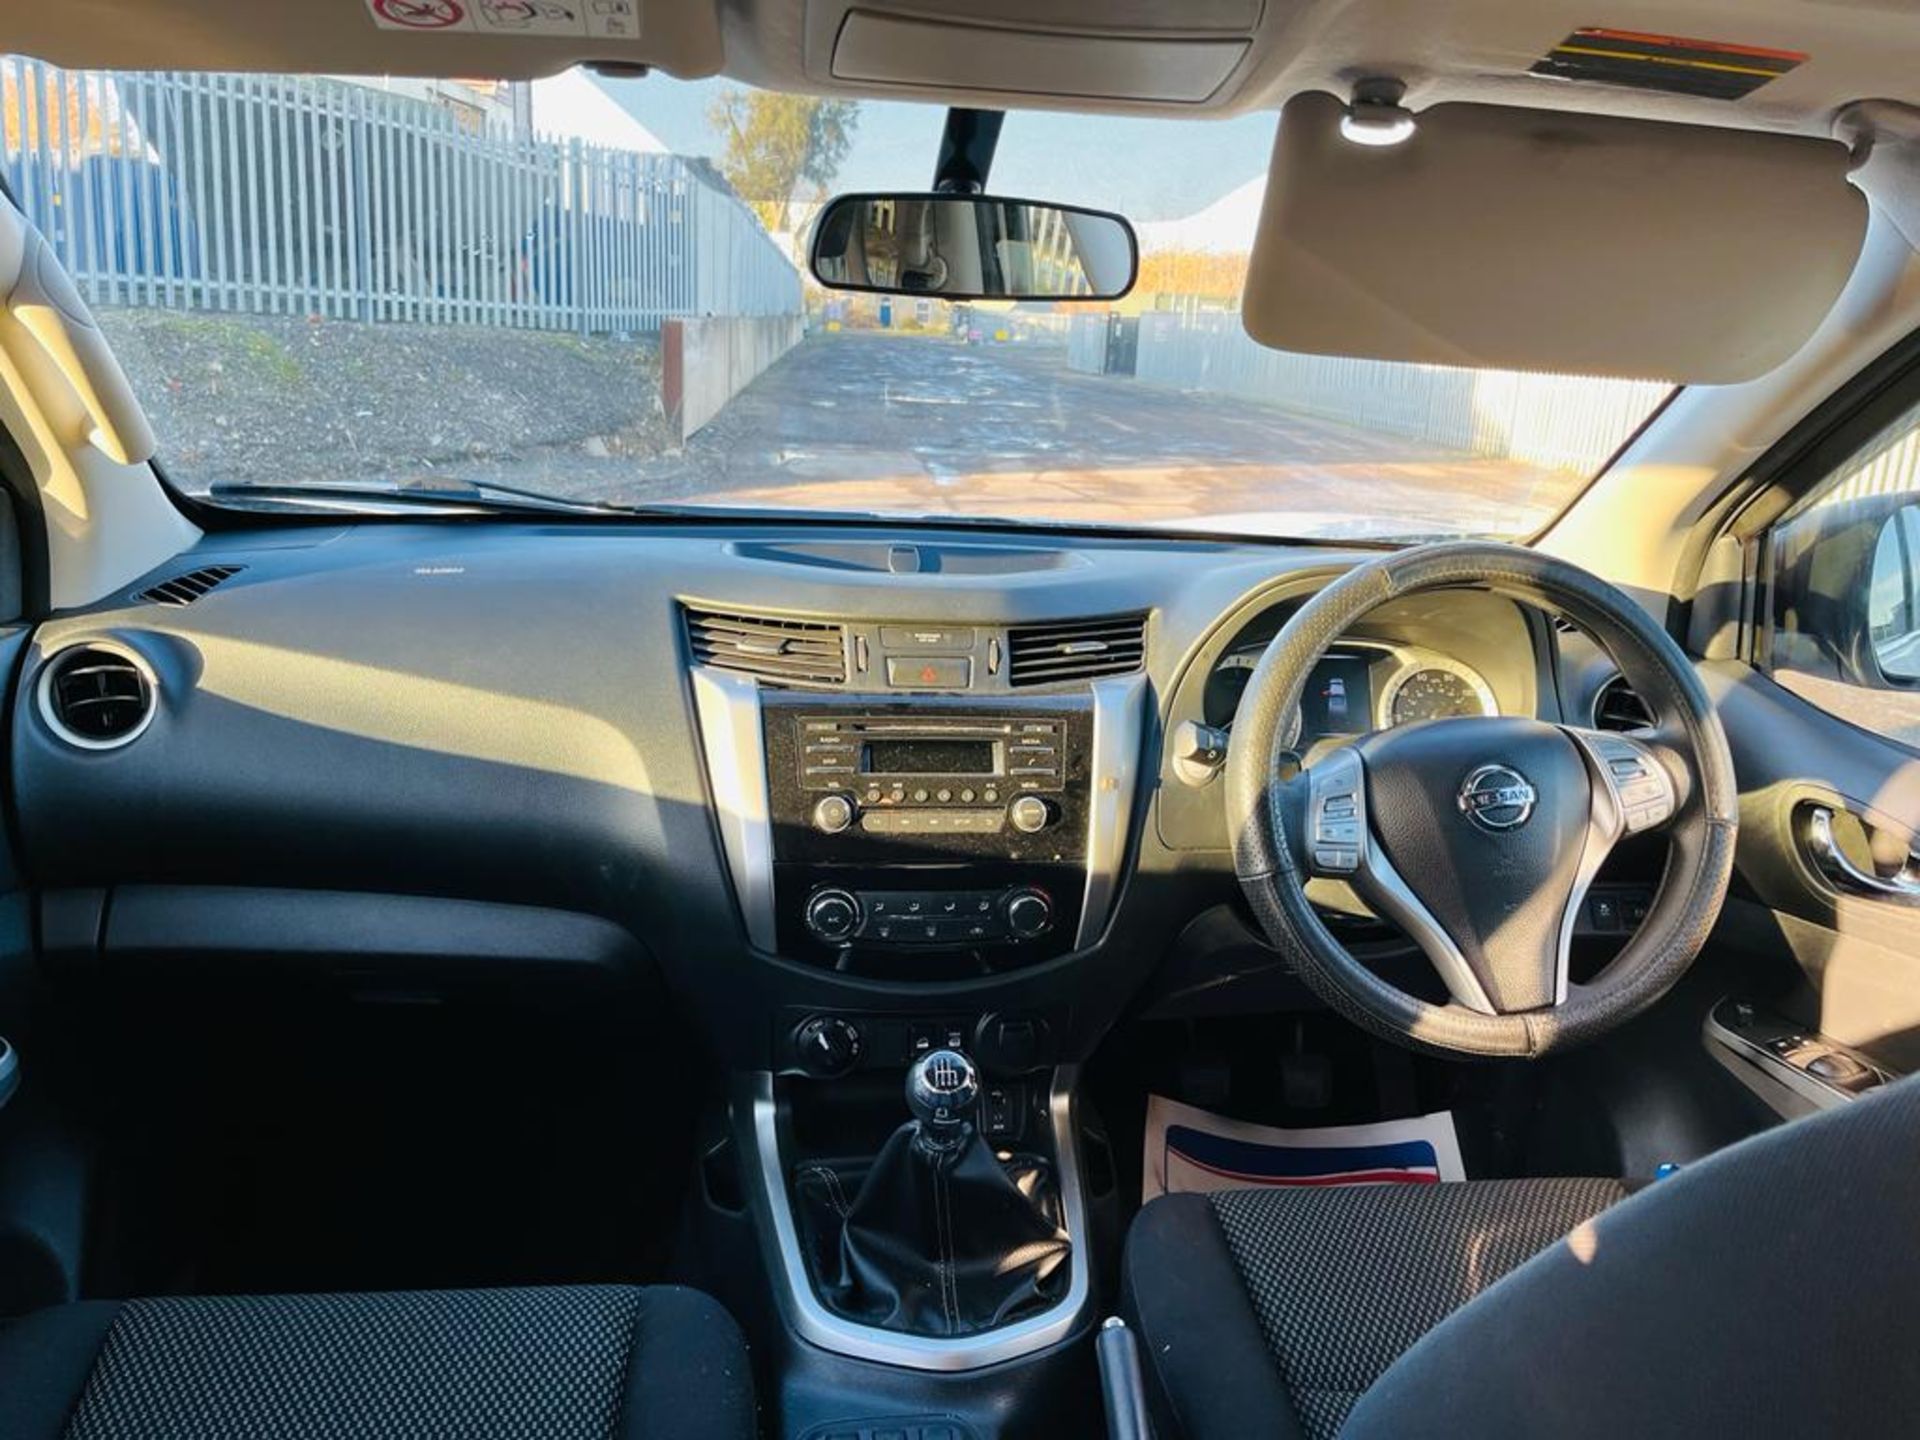 ** ON SALE ** Nissan Navara 2.3 DCI 163 Acenta CrewCab 4WD Pickup 2019 '19 Reg' ULEZ Compliant - Image 16 of 34